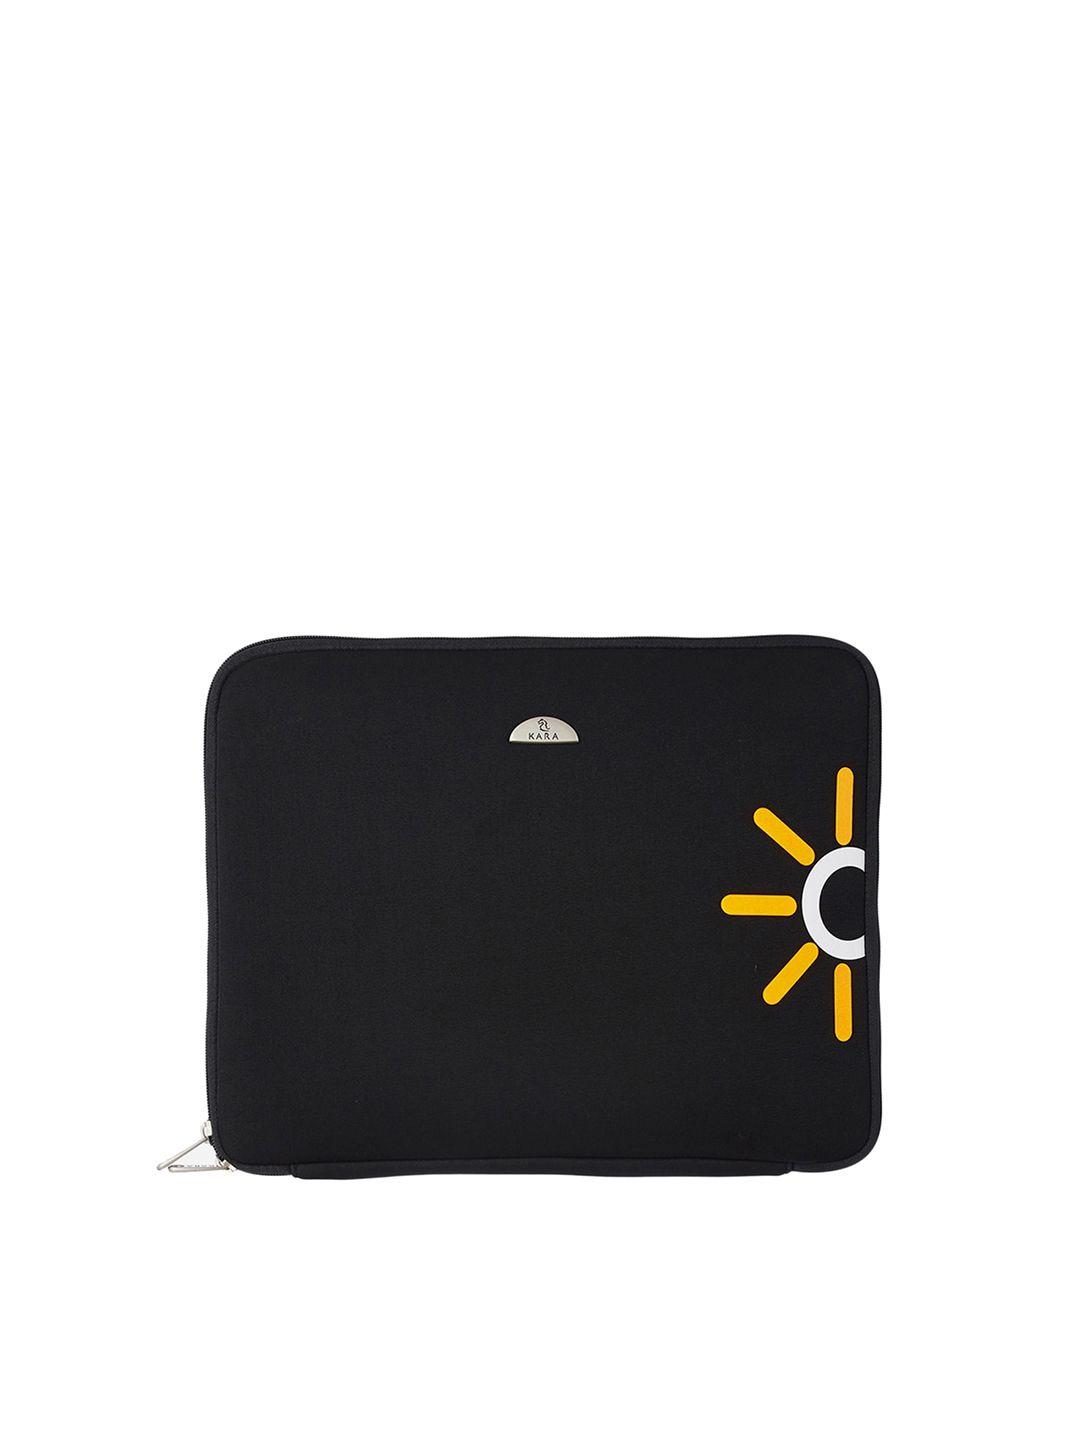 kara unisex black nylon laptop sleeves